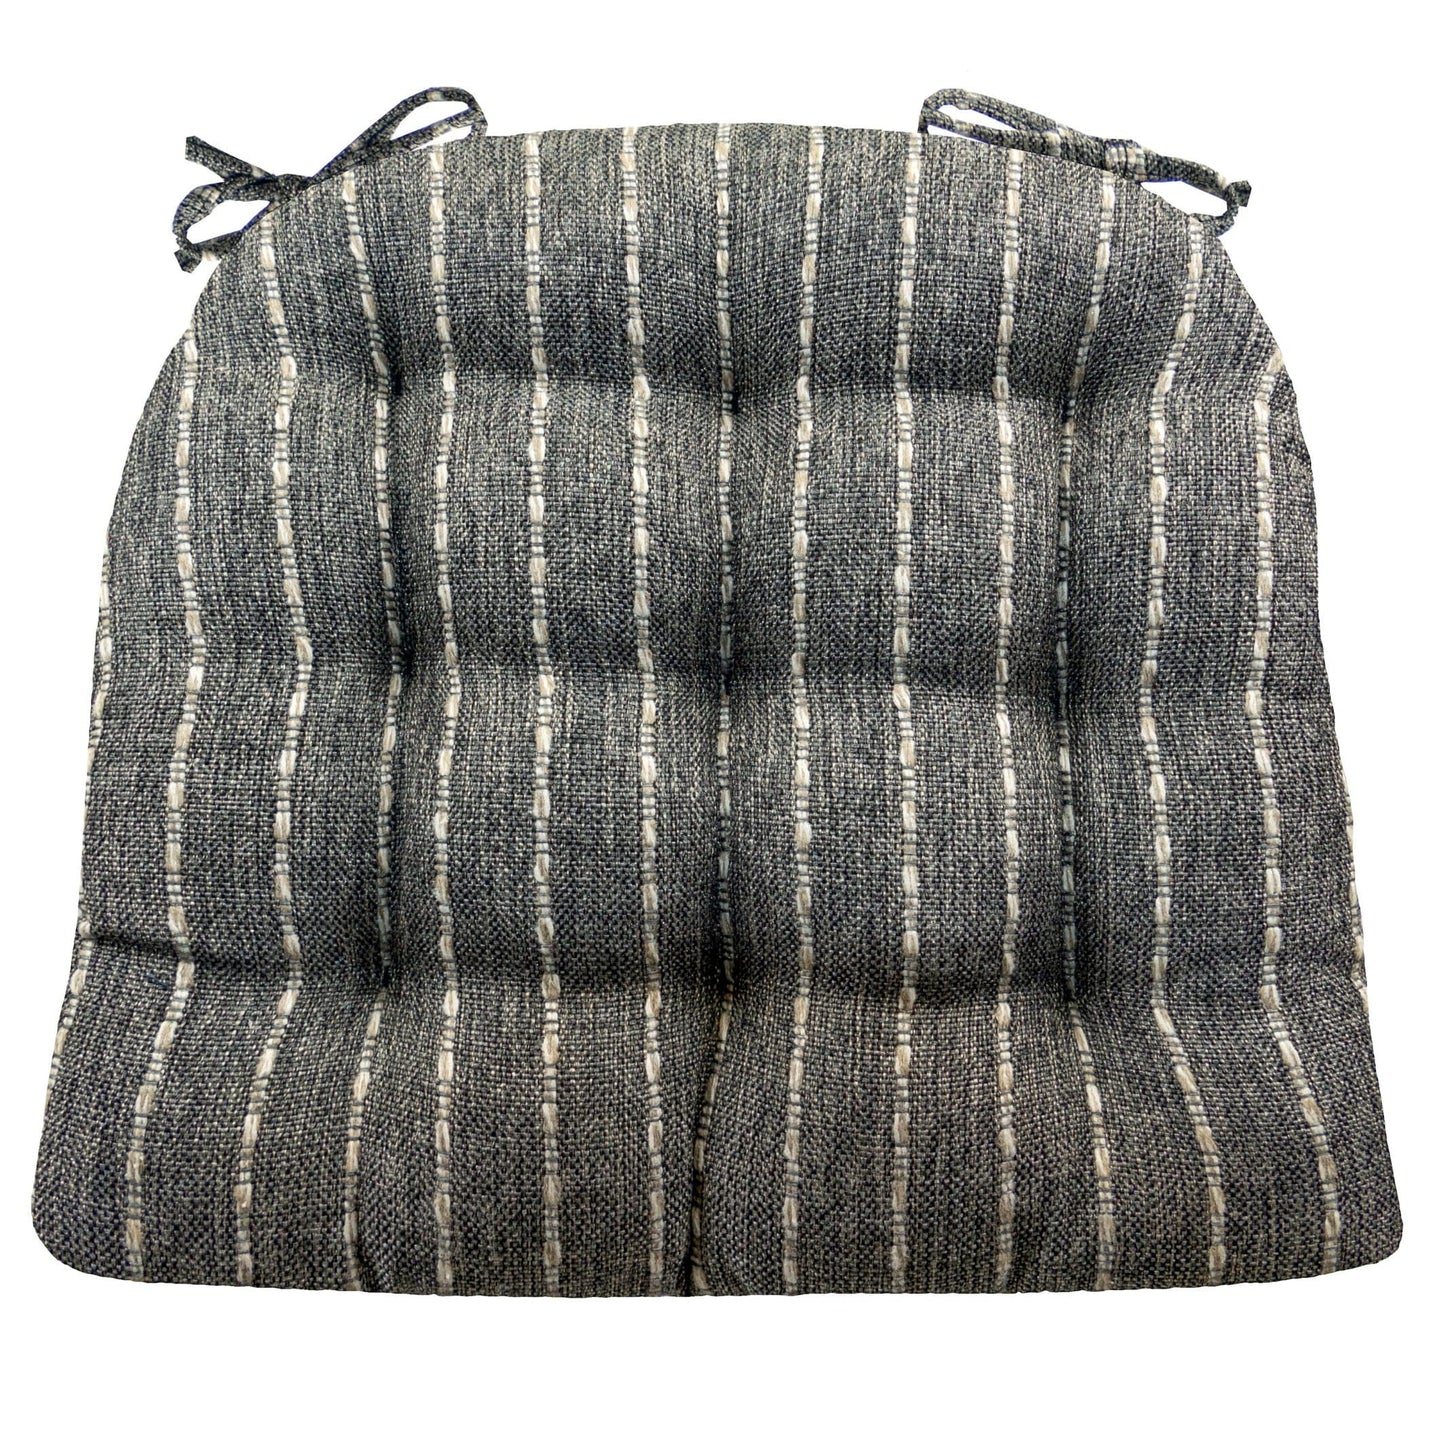 Avante Striped Black Dining Chair Pads - Barnett Home Décor